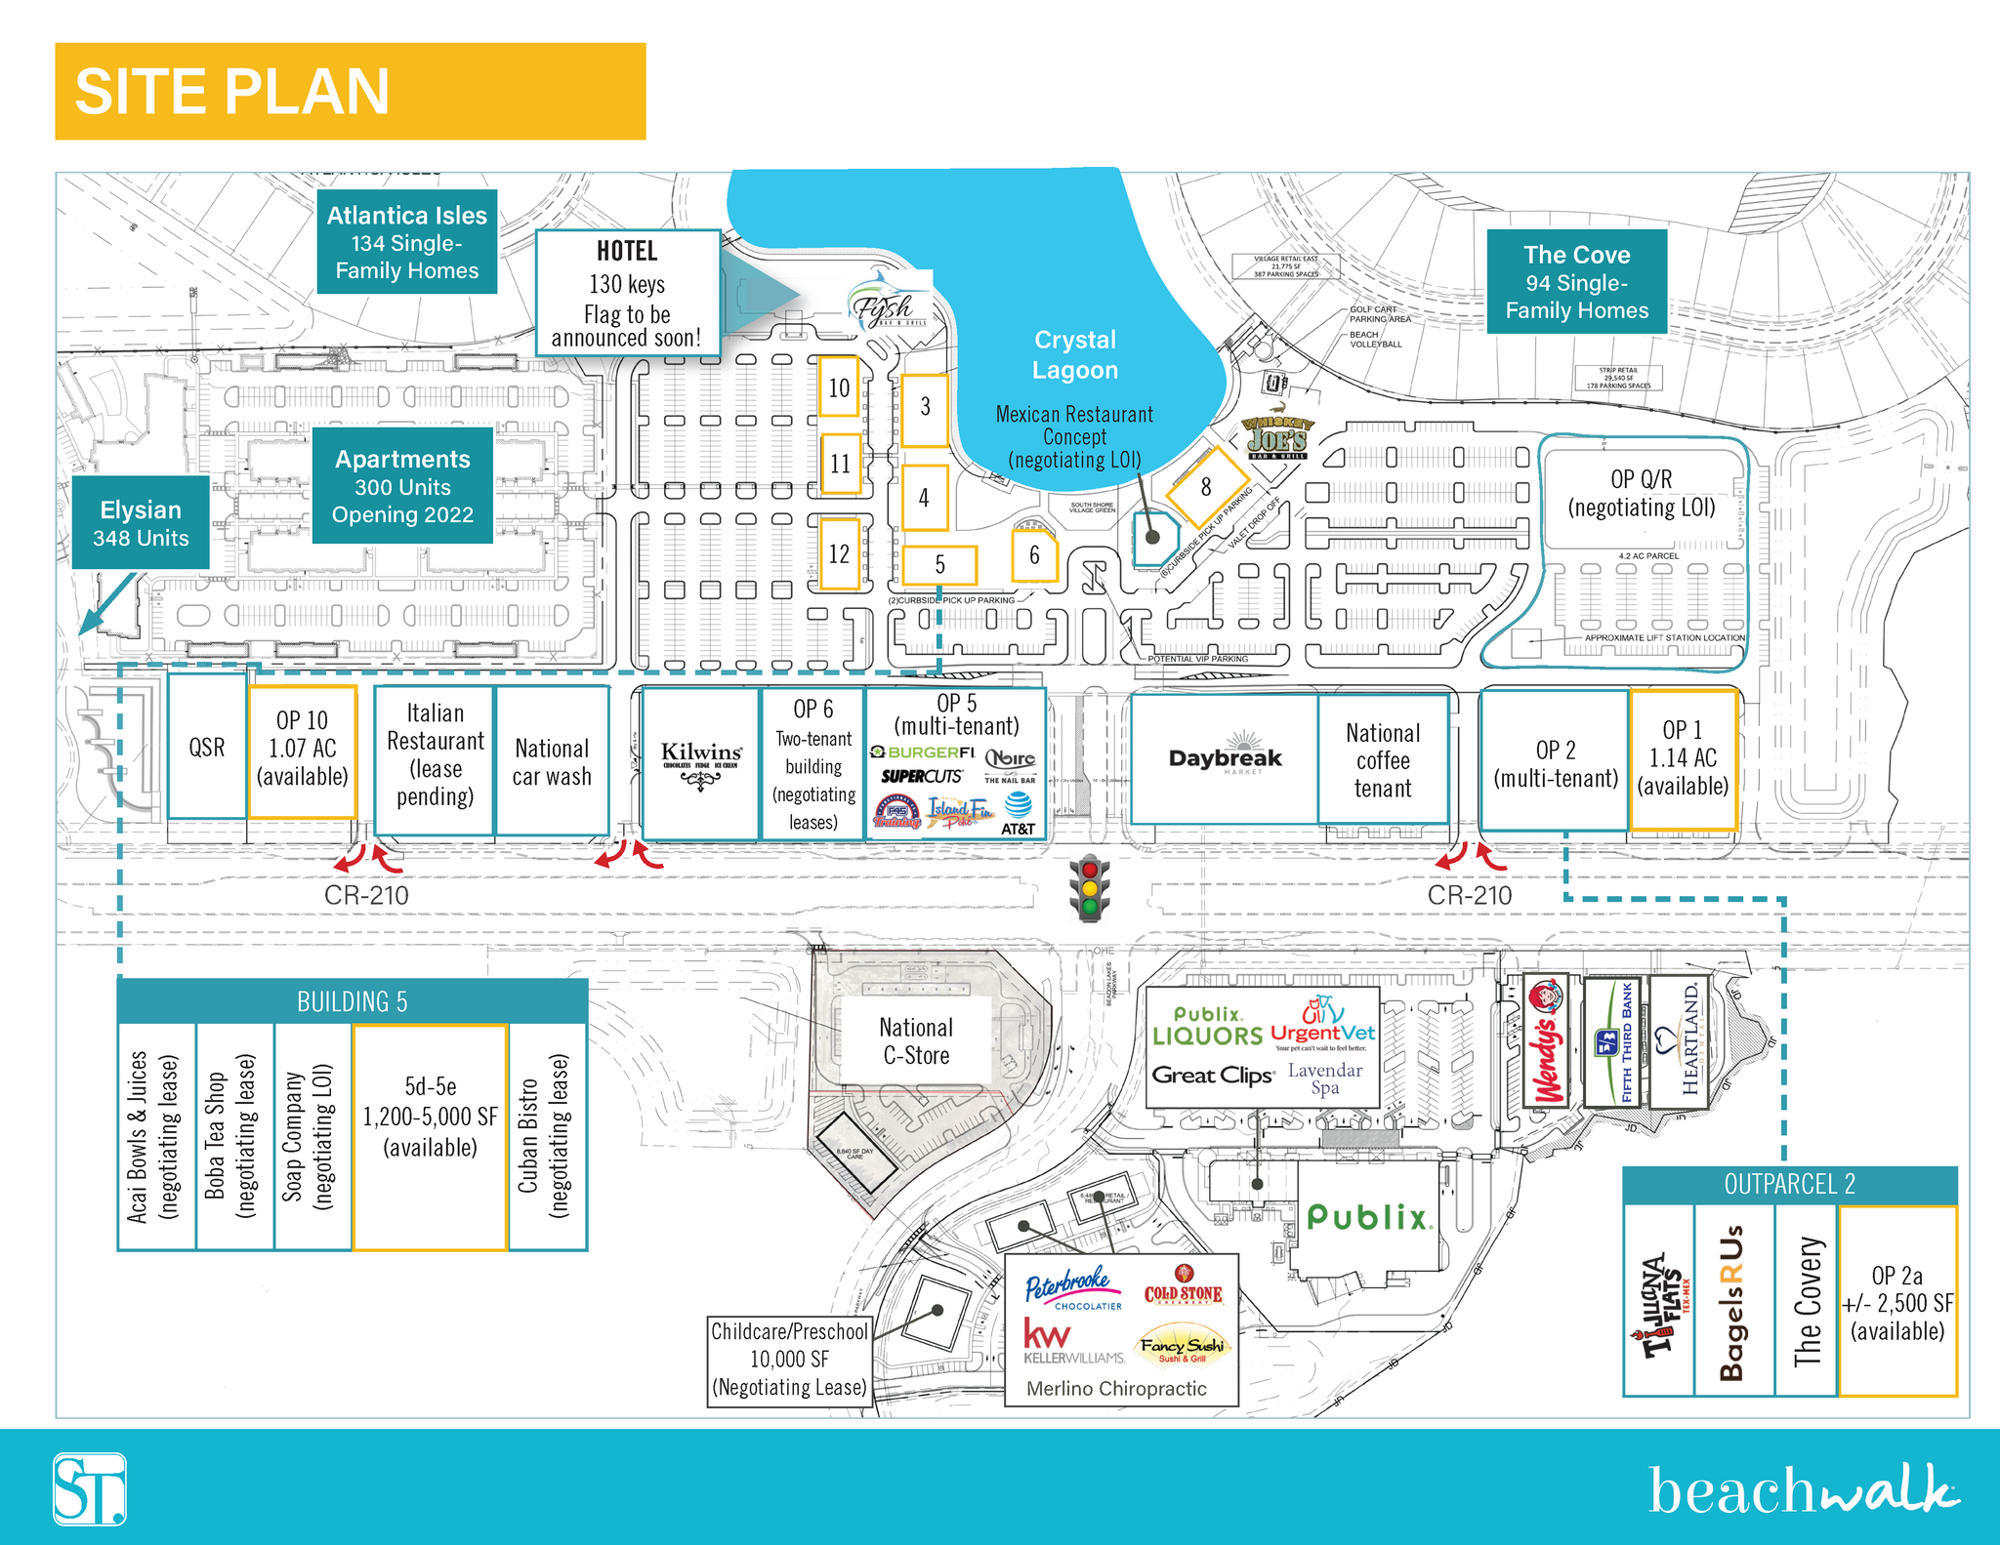 A development site plan for Beachwalk shows the future hotel site.